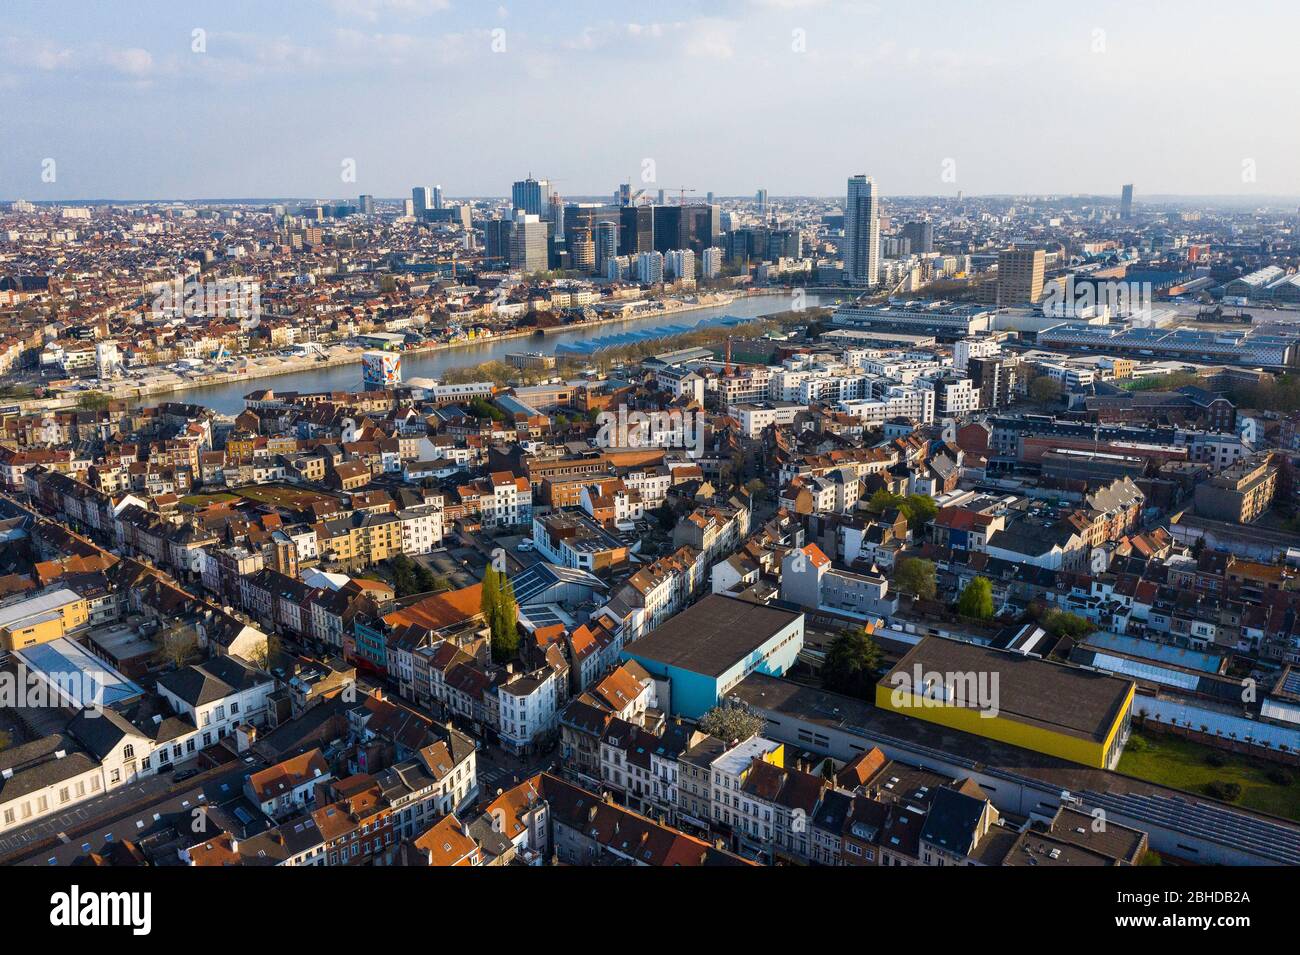 Brussels, Laeken, Belgium, April 8, 2020: Aerial view of Laeken street with tram rails Stock Photo